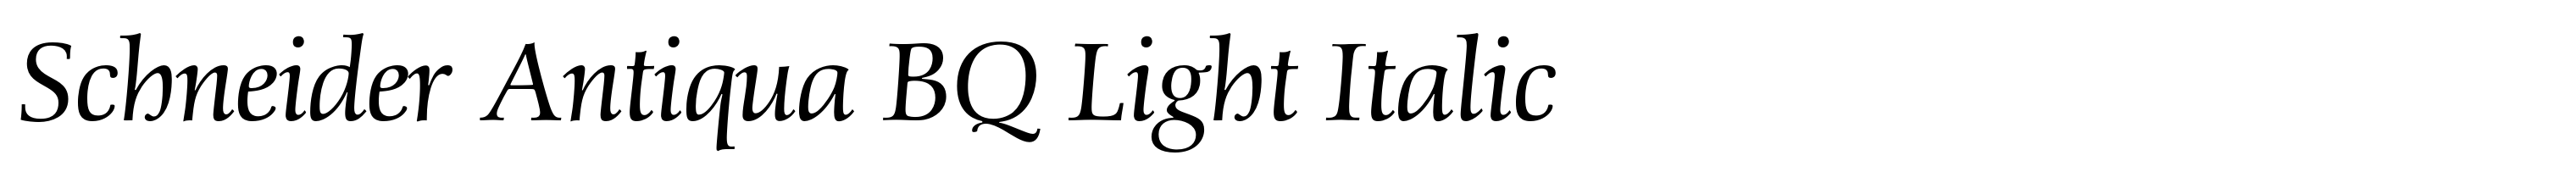 Schneider Antiqua BQ Light Italic